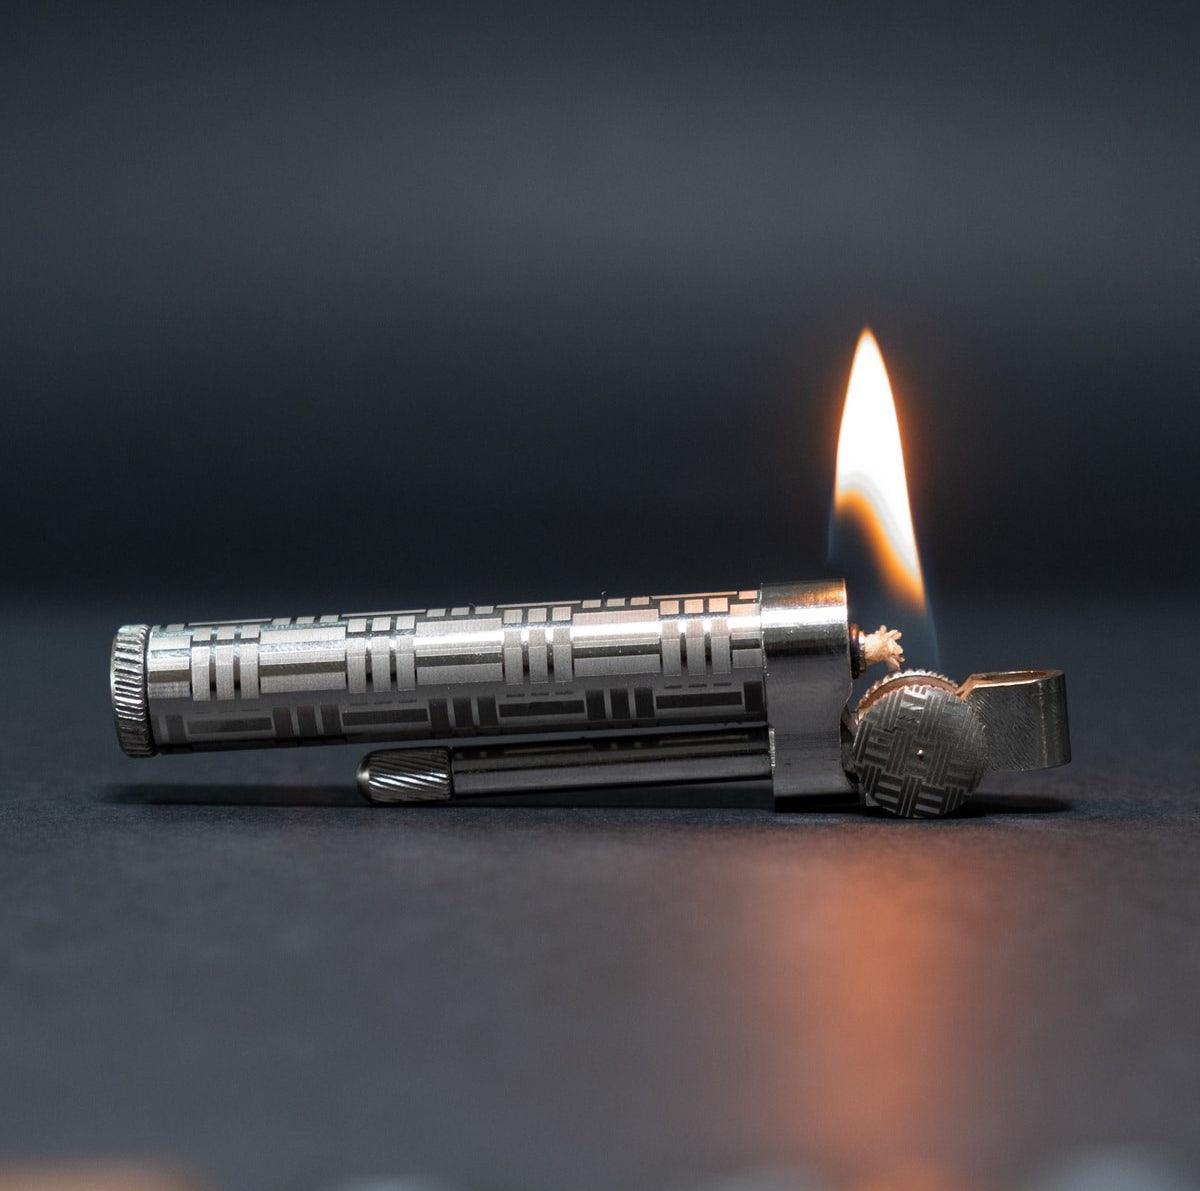 Armadon Special Silver Lighter - Yuku Lighter